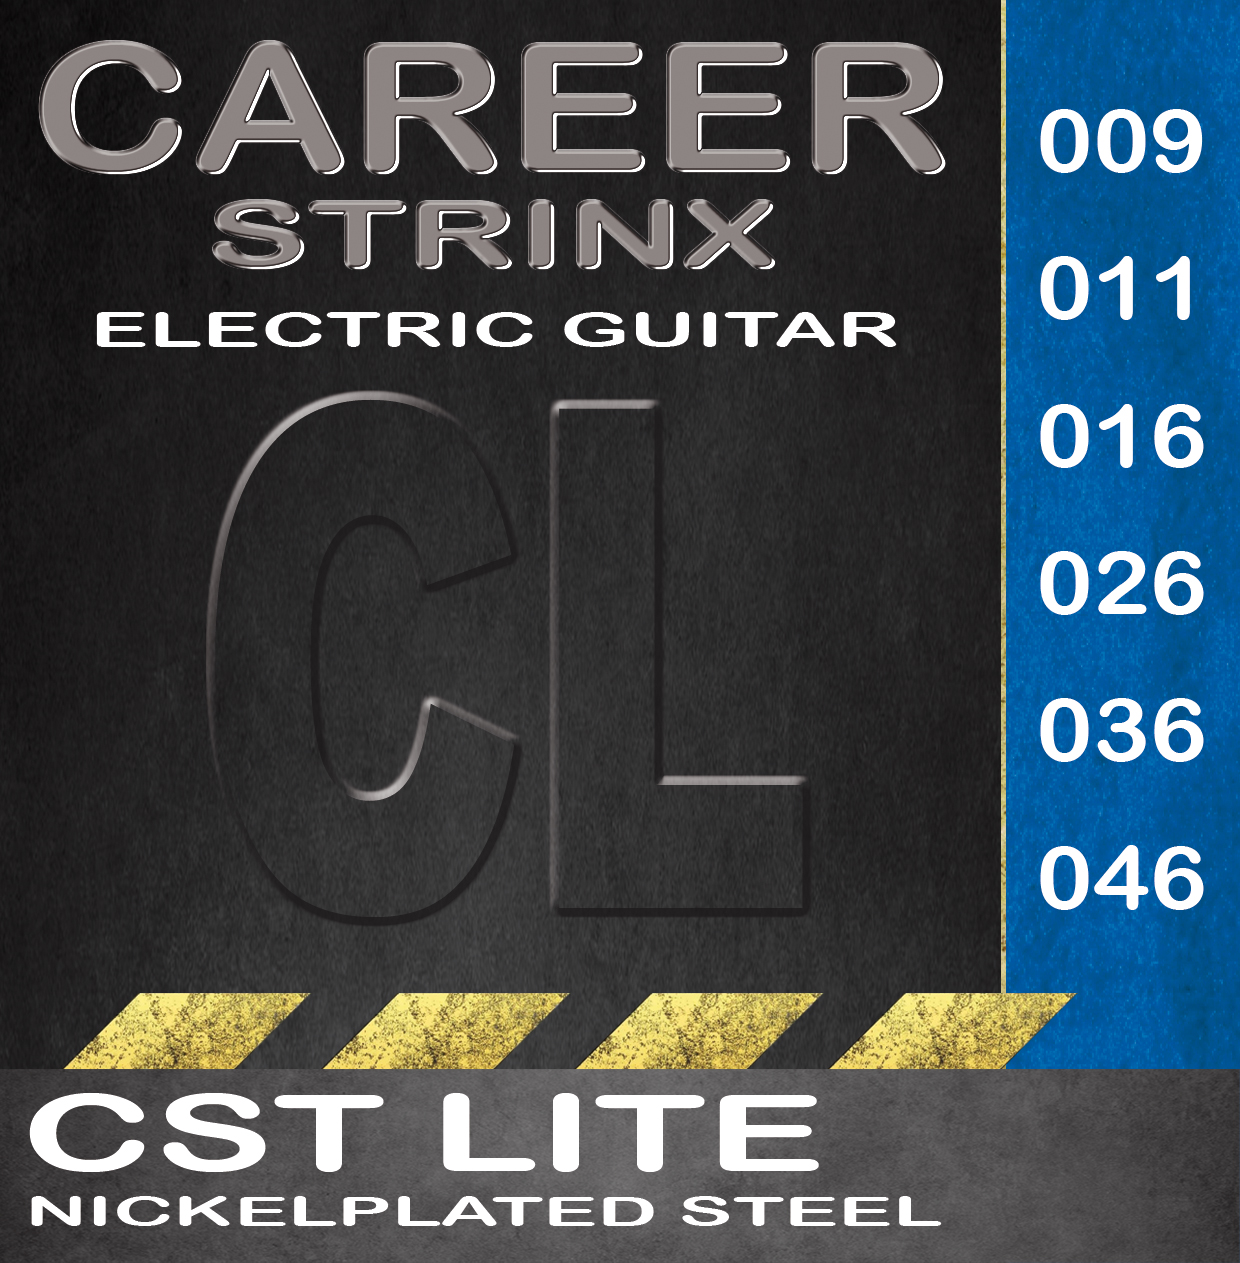 Career Electric Strinx CL 009/​046 